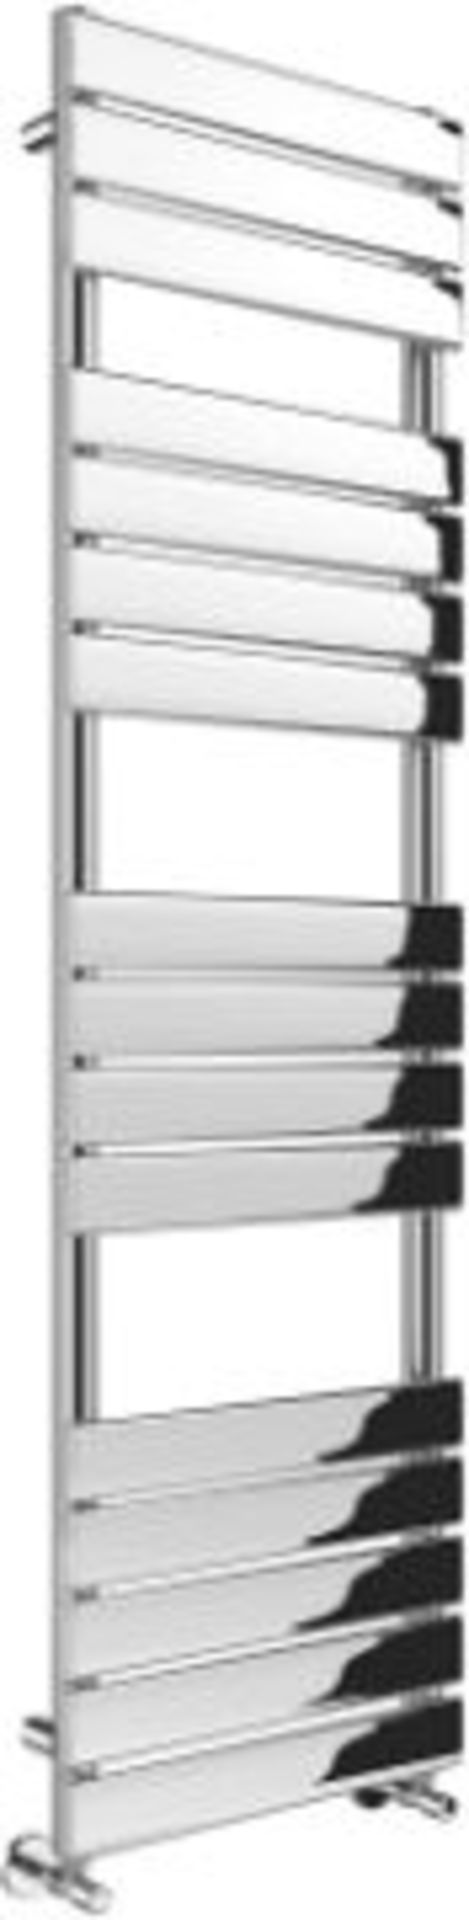 New & Boxed 1600x500mm Chrome Straight Towel Radiator Ladder Modern Bathroom. Rf1600500.Constr... - Image 2 of 2